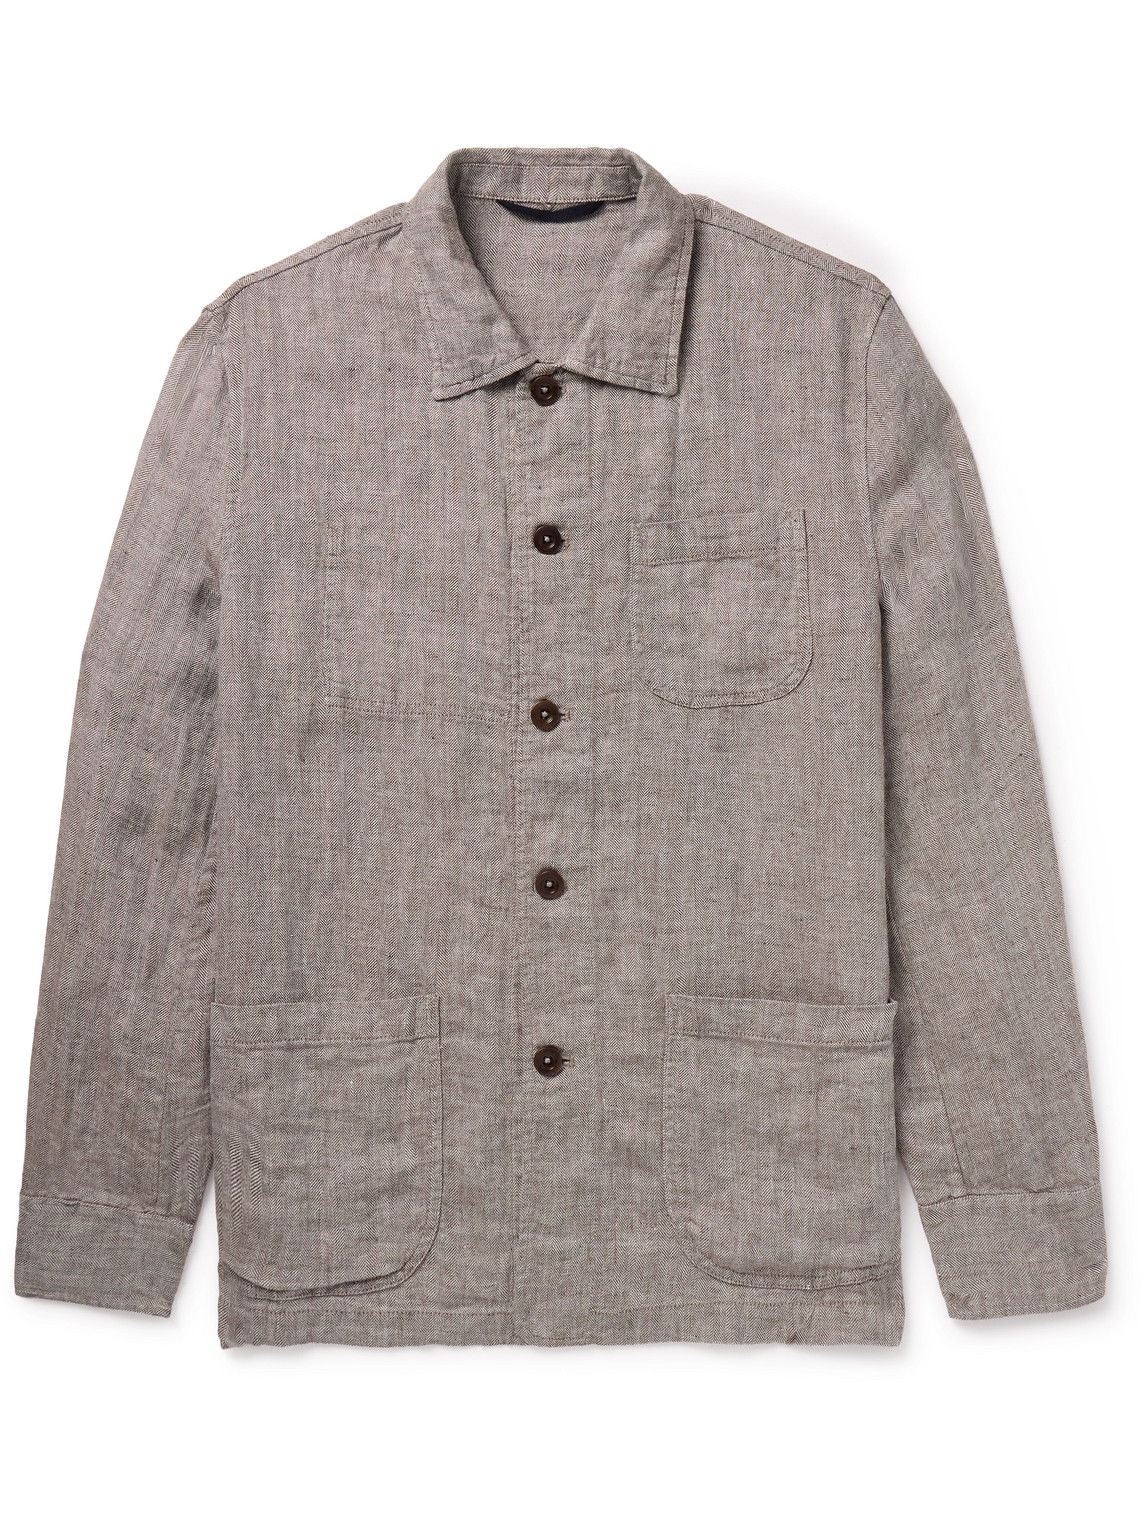 Herringbone Linen Chore Jacket